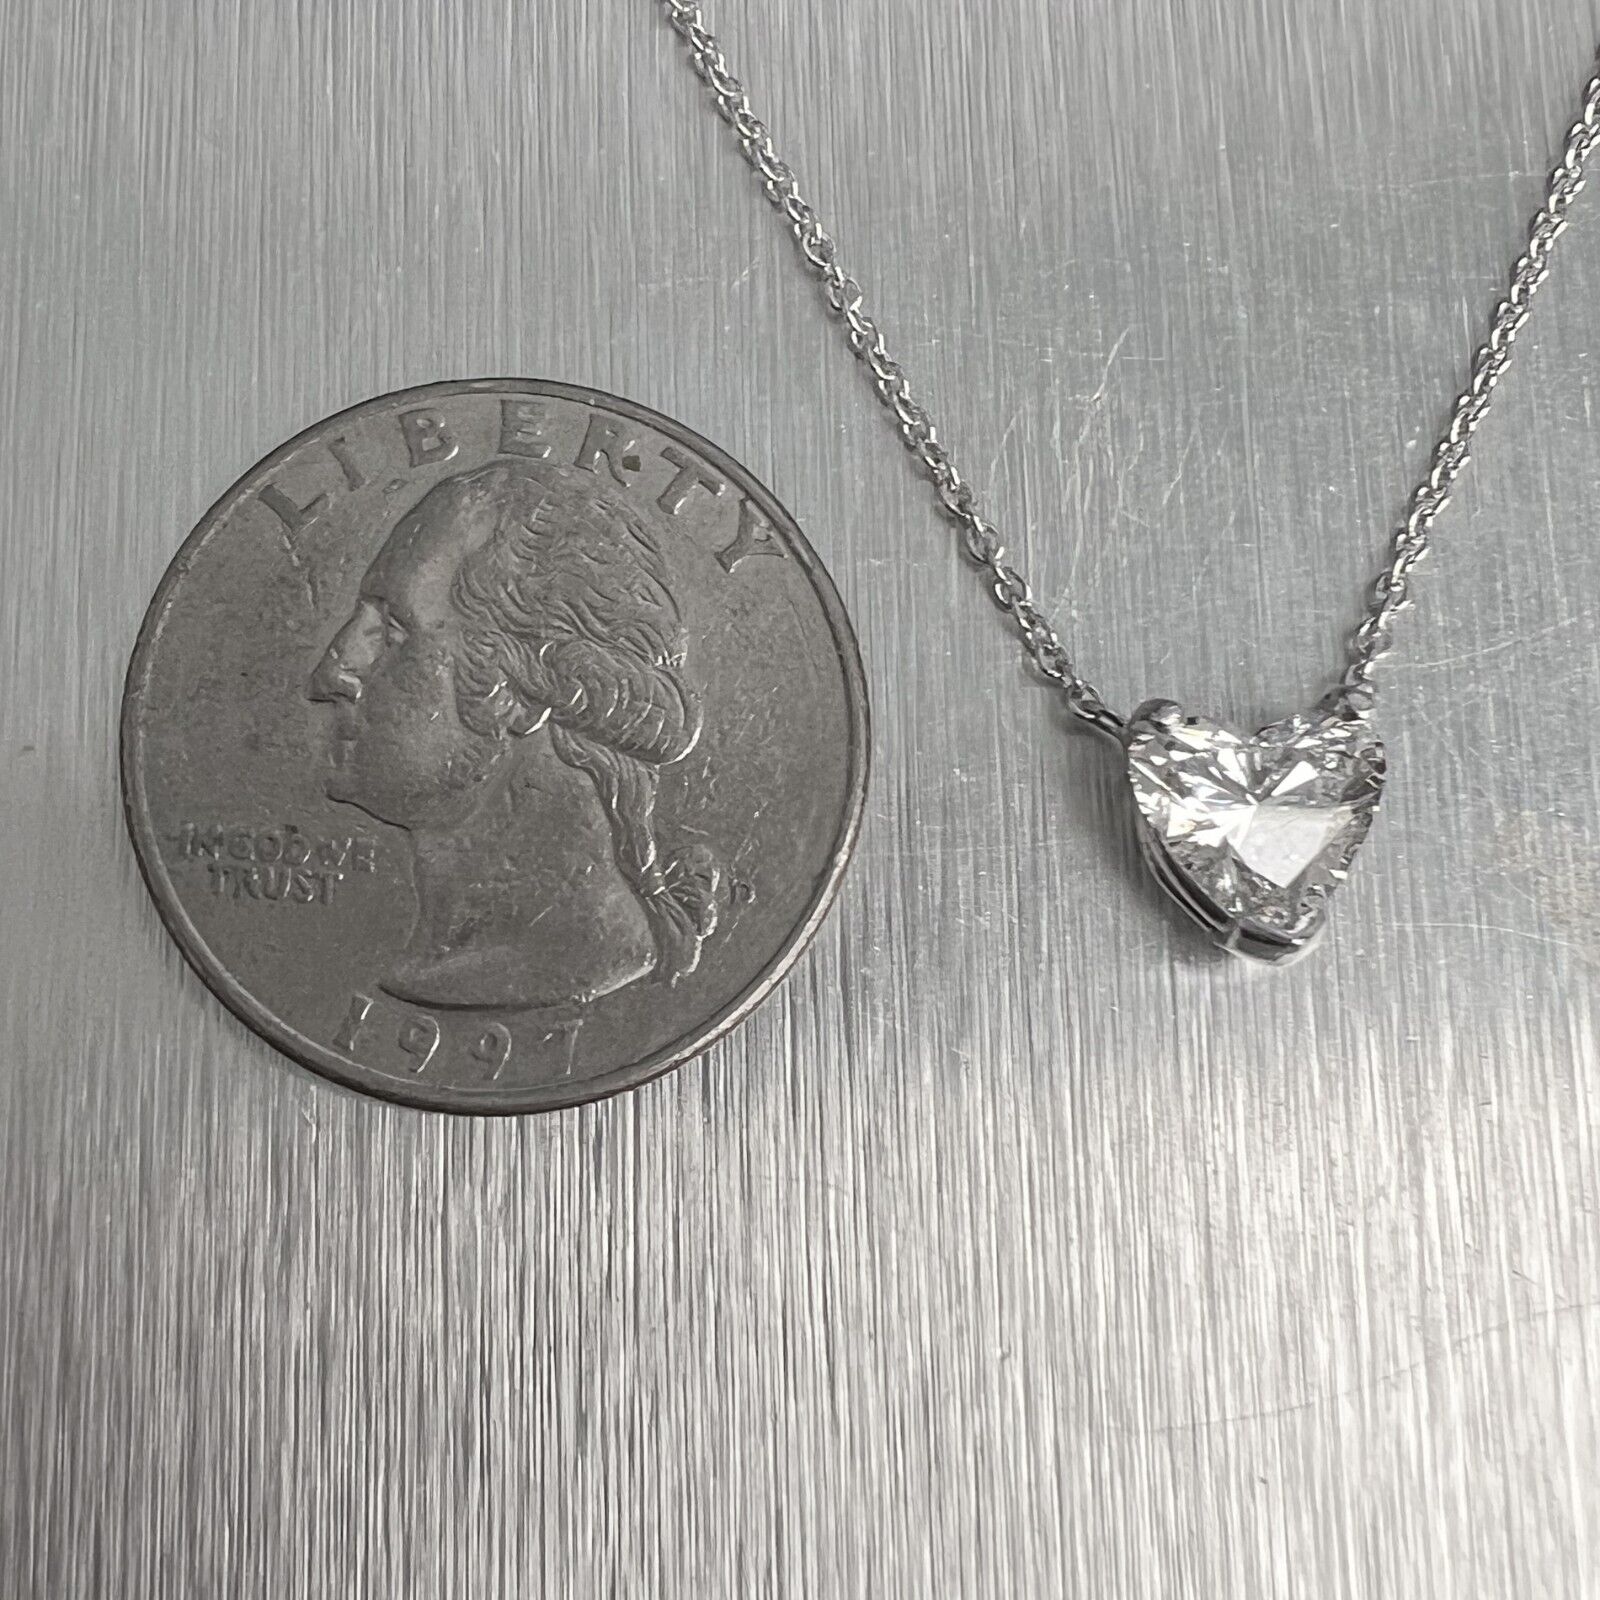 18k White Gold GIA Heart Brilliant Diamond Pendant Necklace 1.25ct F I1 18.25"